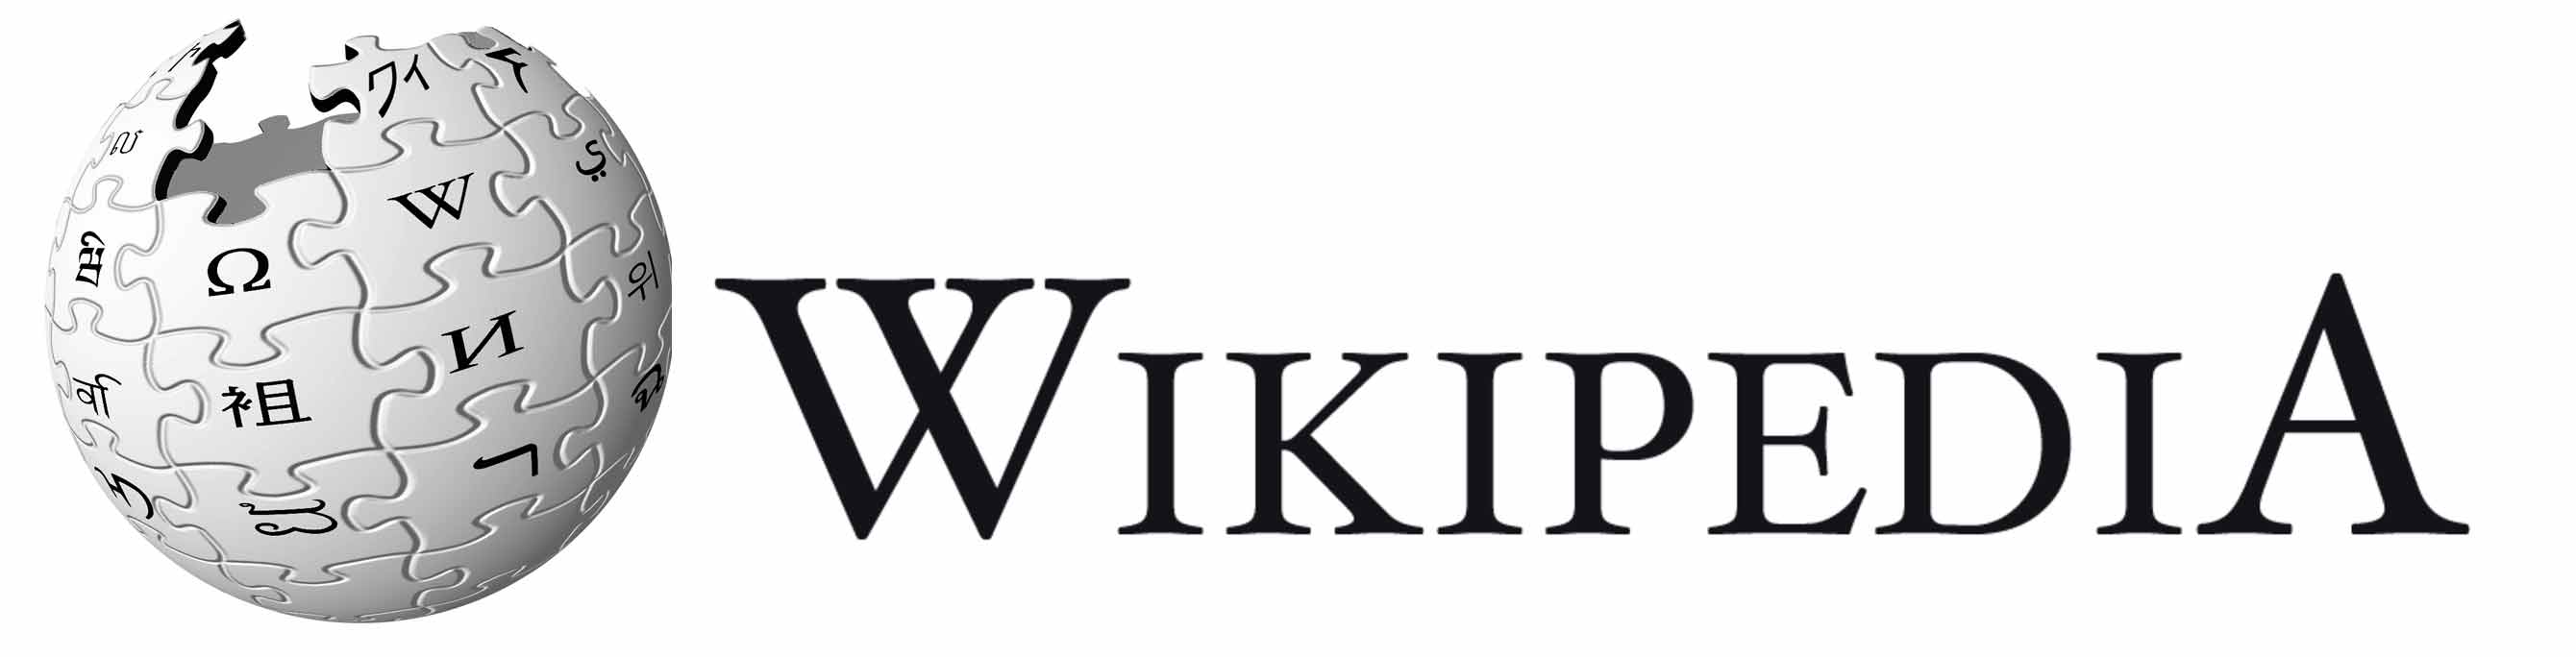 Википедия https ru wikipedia org